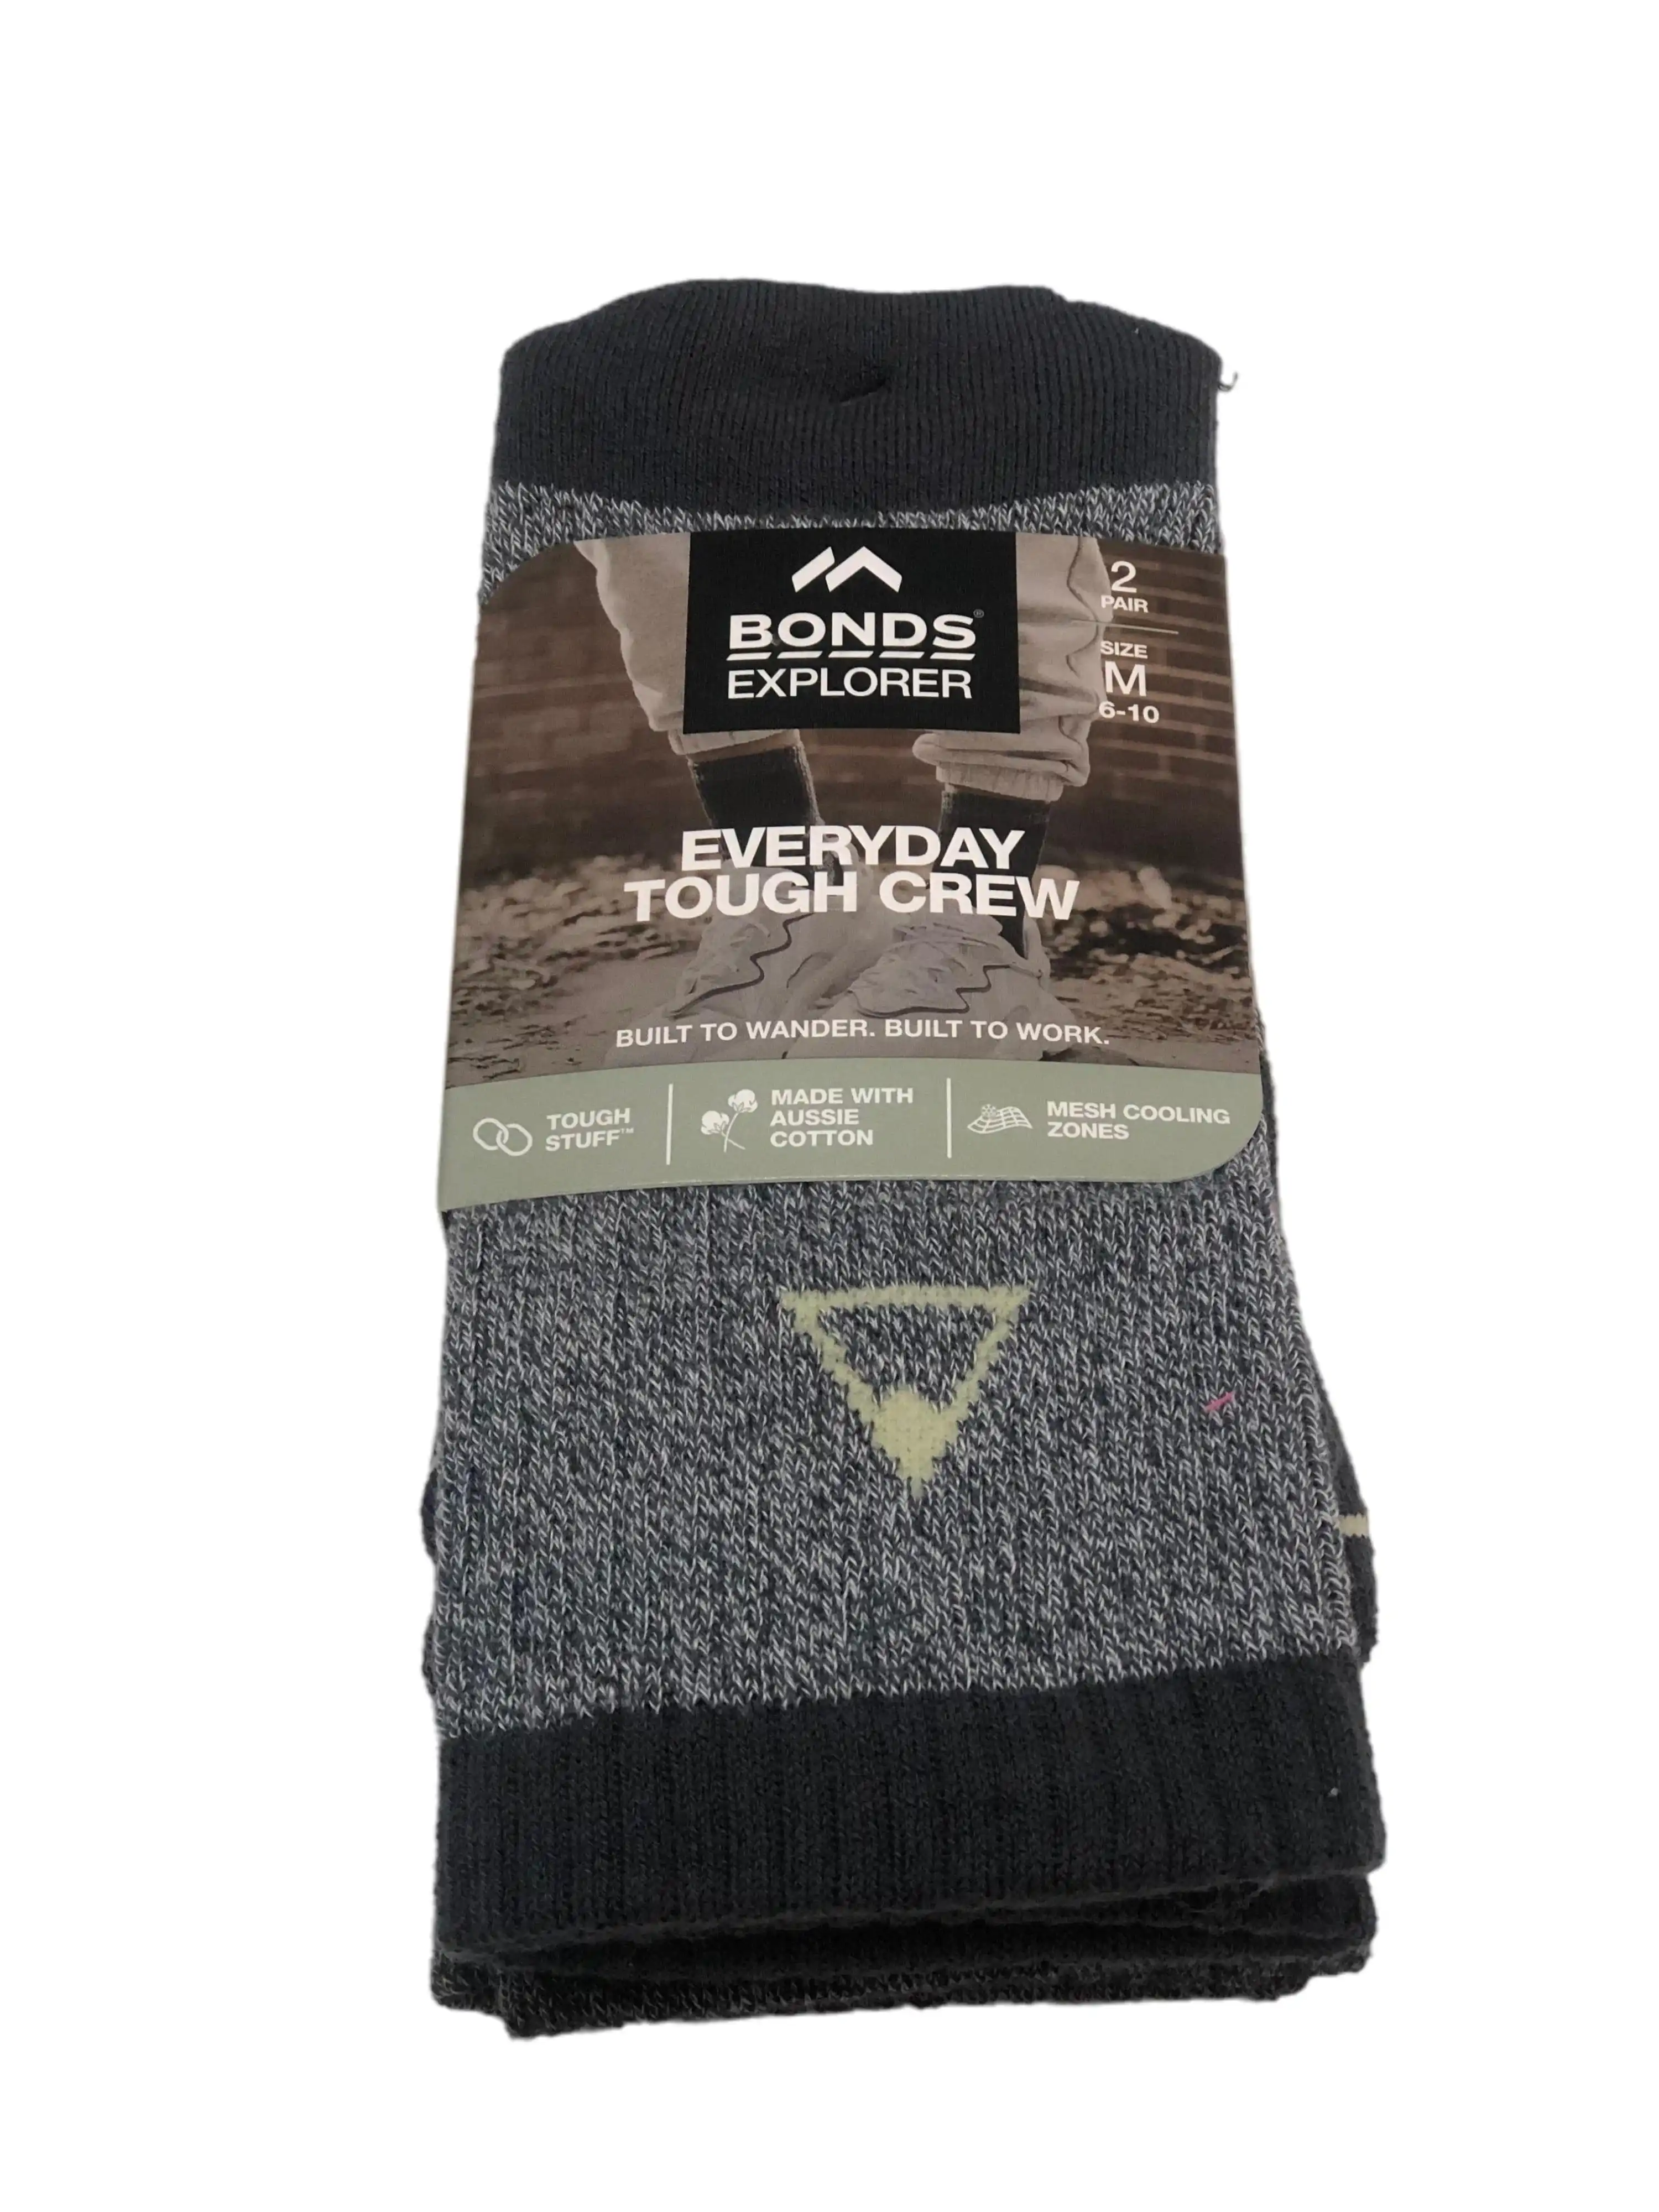 10 x Bonds Explorer Everyday Tough Crew Cotton Blend Socks - Grey 09K Print